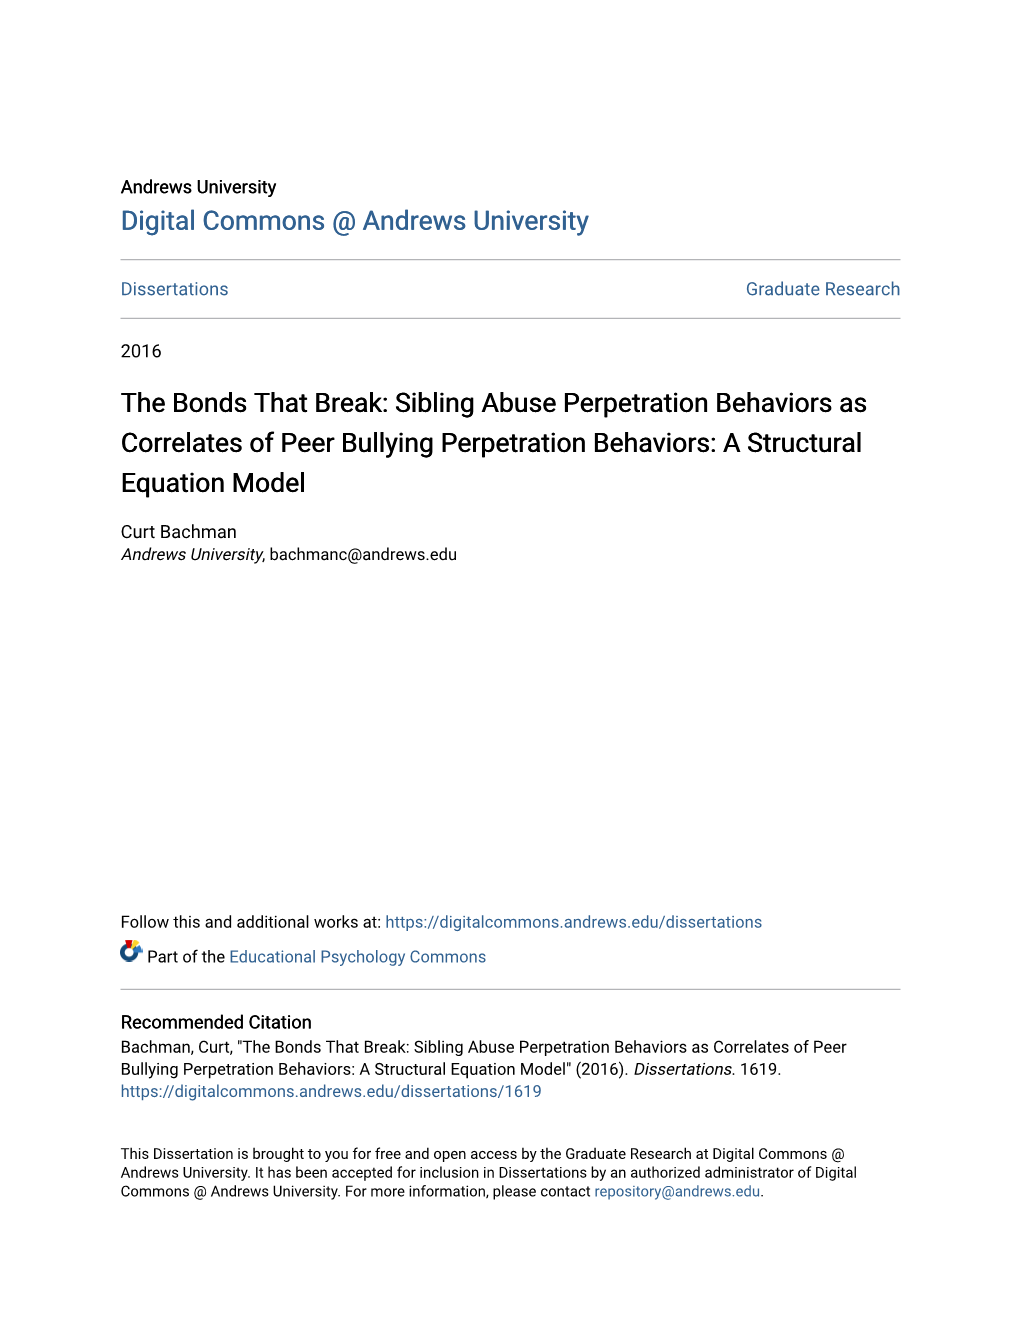 The Bonds That Break: Sibling Abuse Perpetration Behaviors As Correlates of Peer Bullying Perpetration Behaviors: a Structural Equation Model